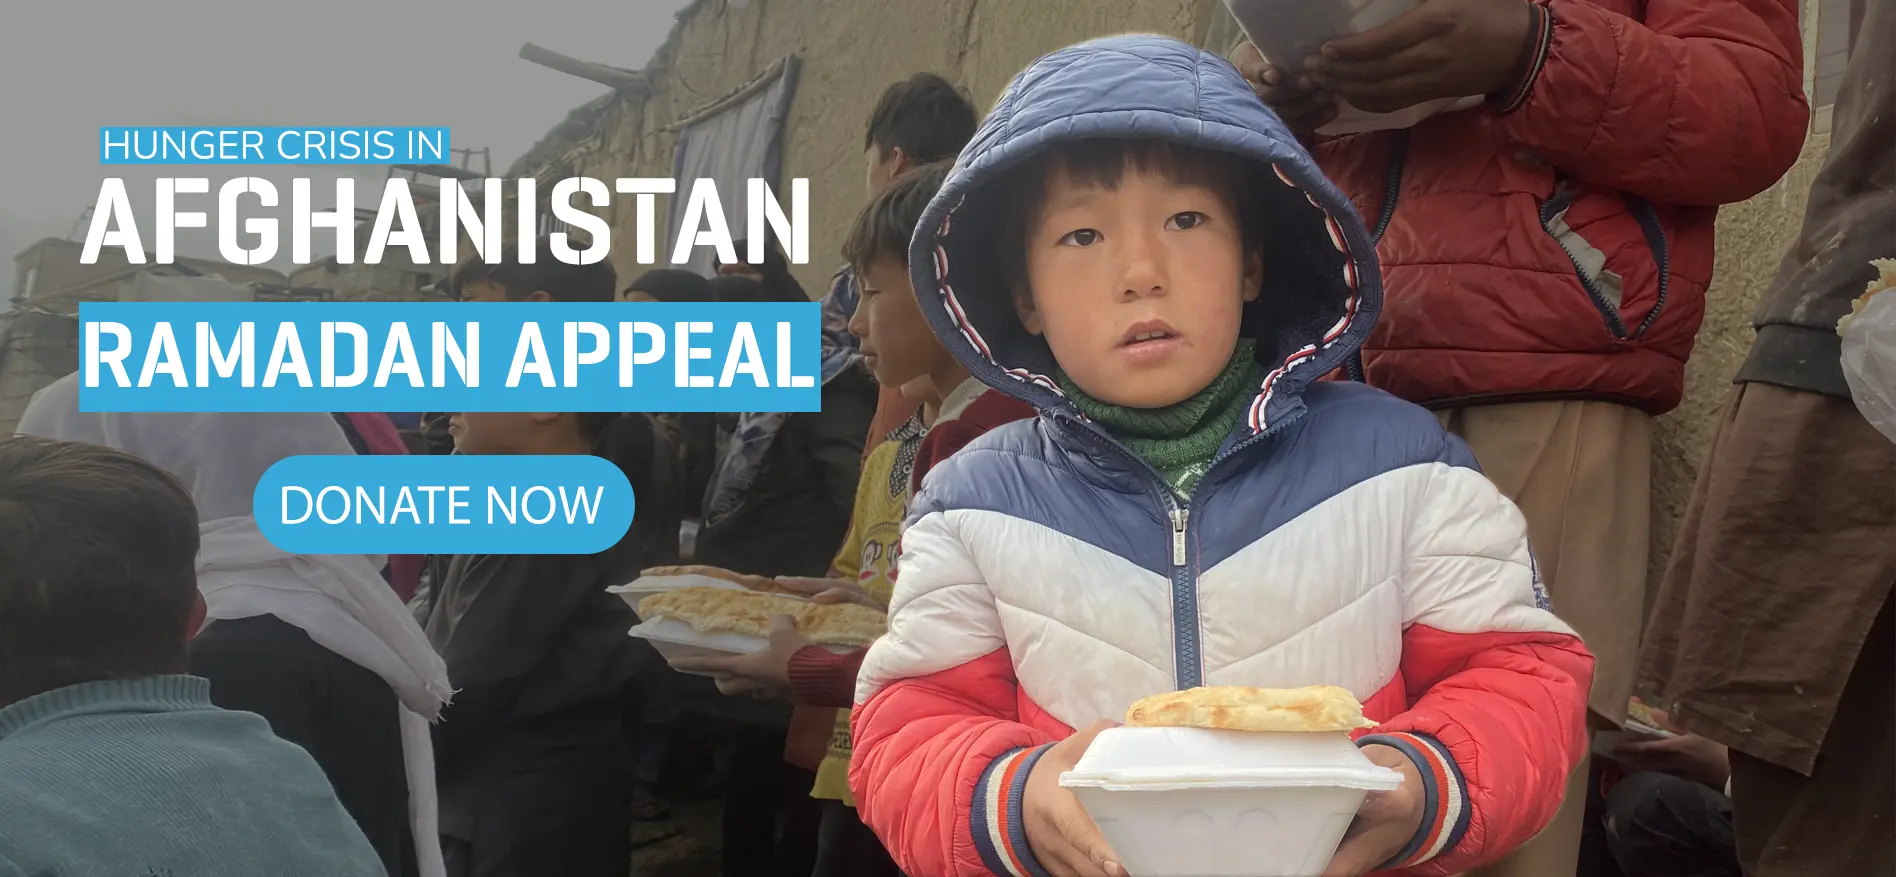 Ramadan Kareem in Afghanistan, feed 300 souls this Ramadan